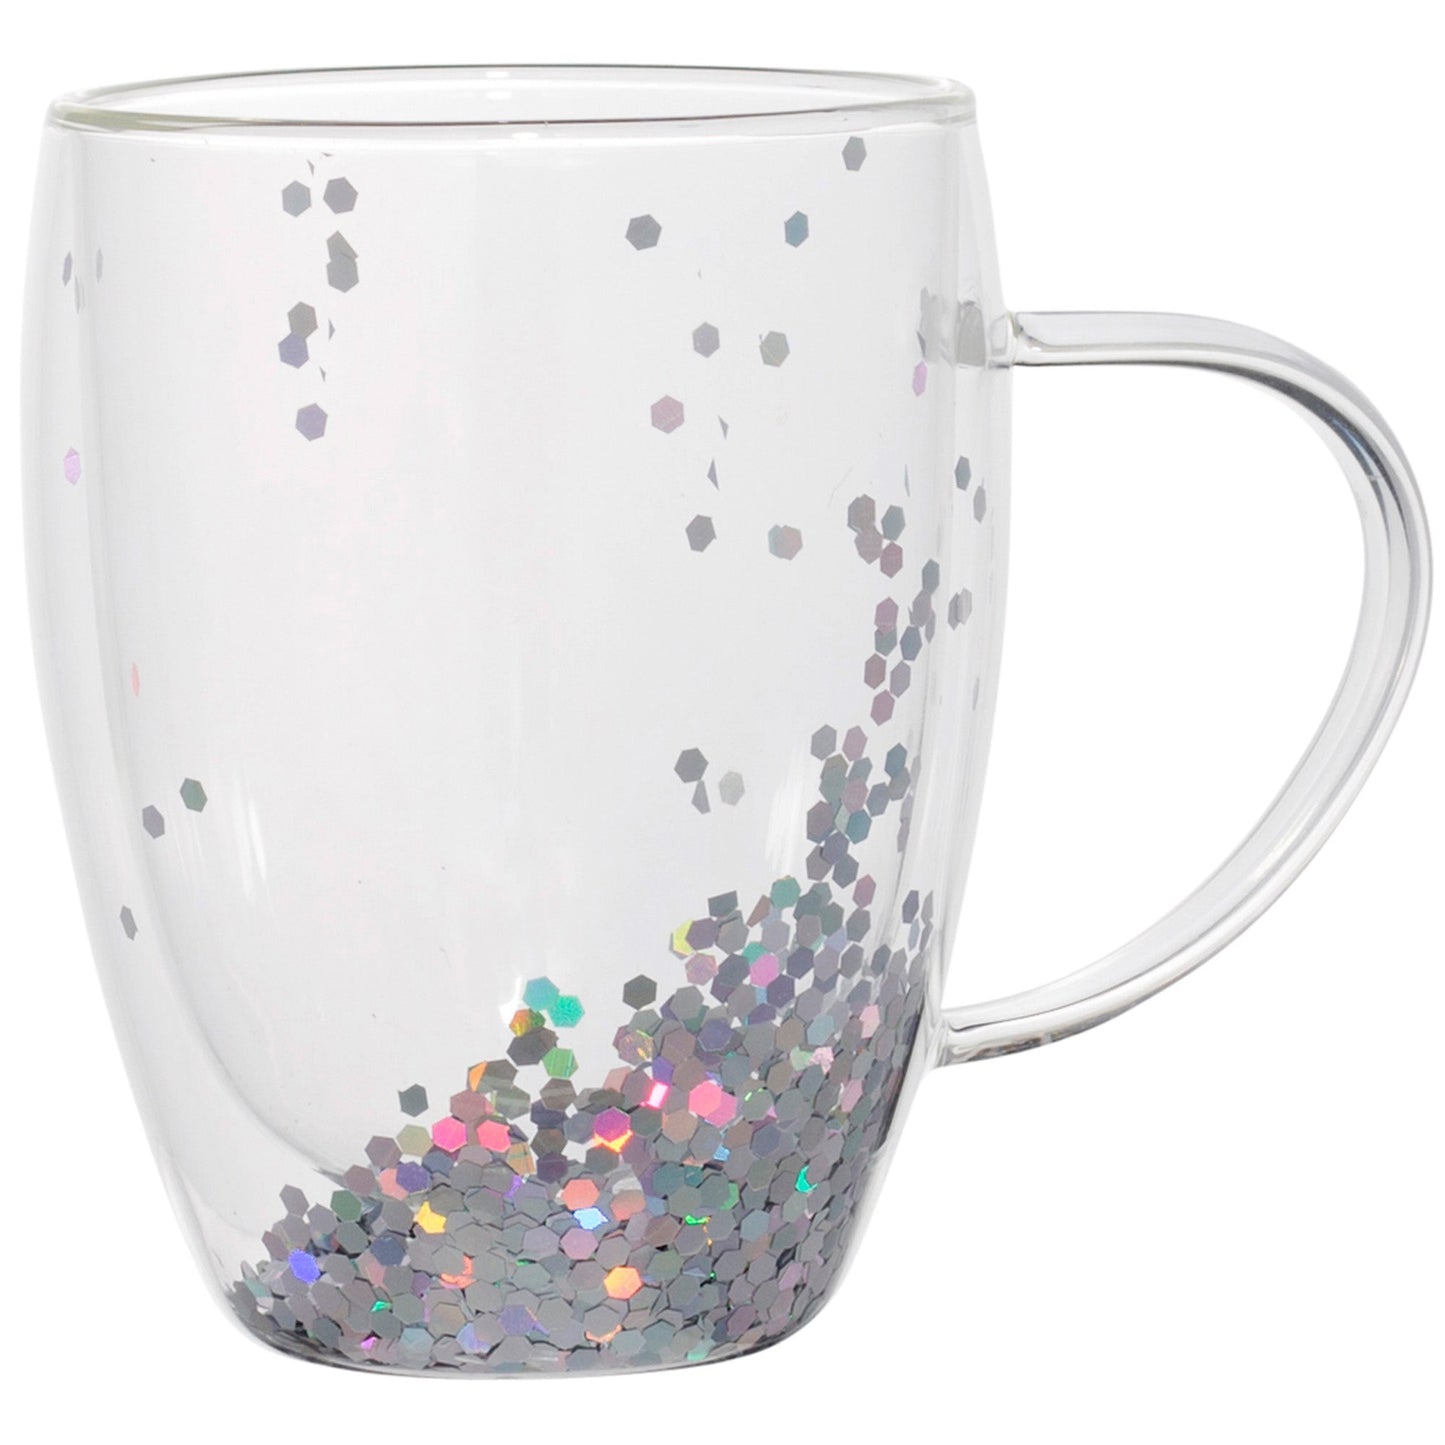 Glitter Coffee Mug, 12 Ounce, Multicolor